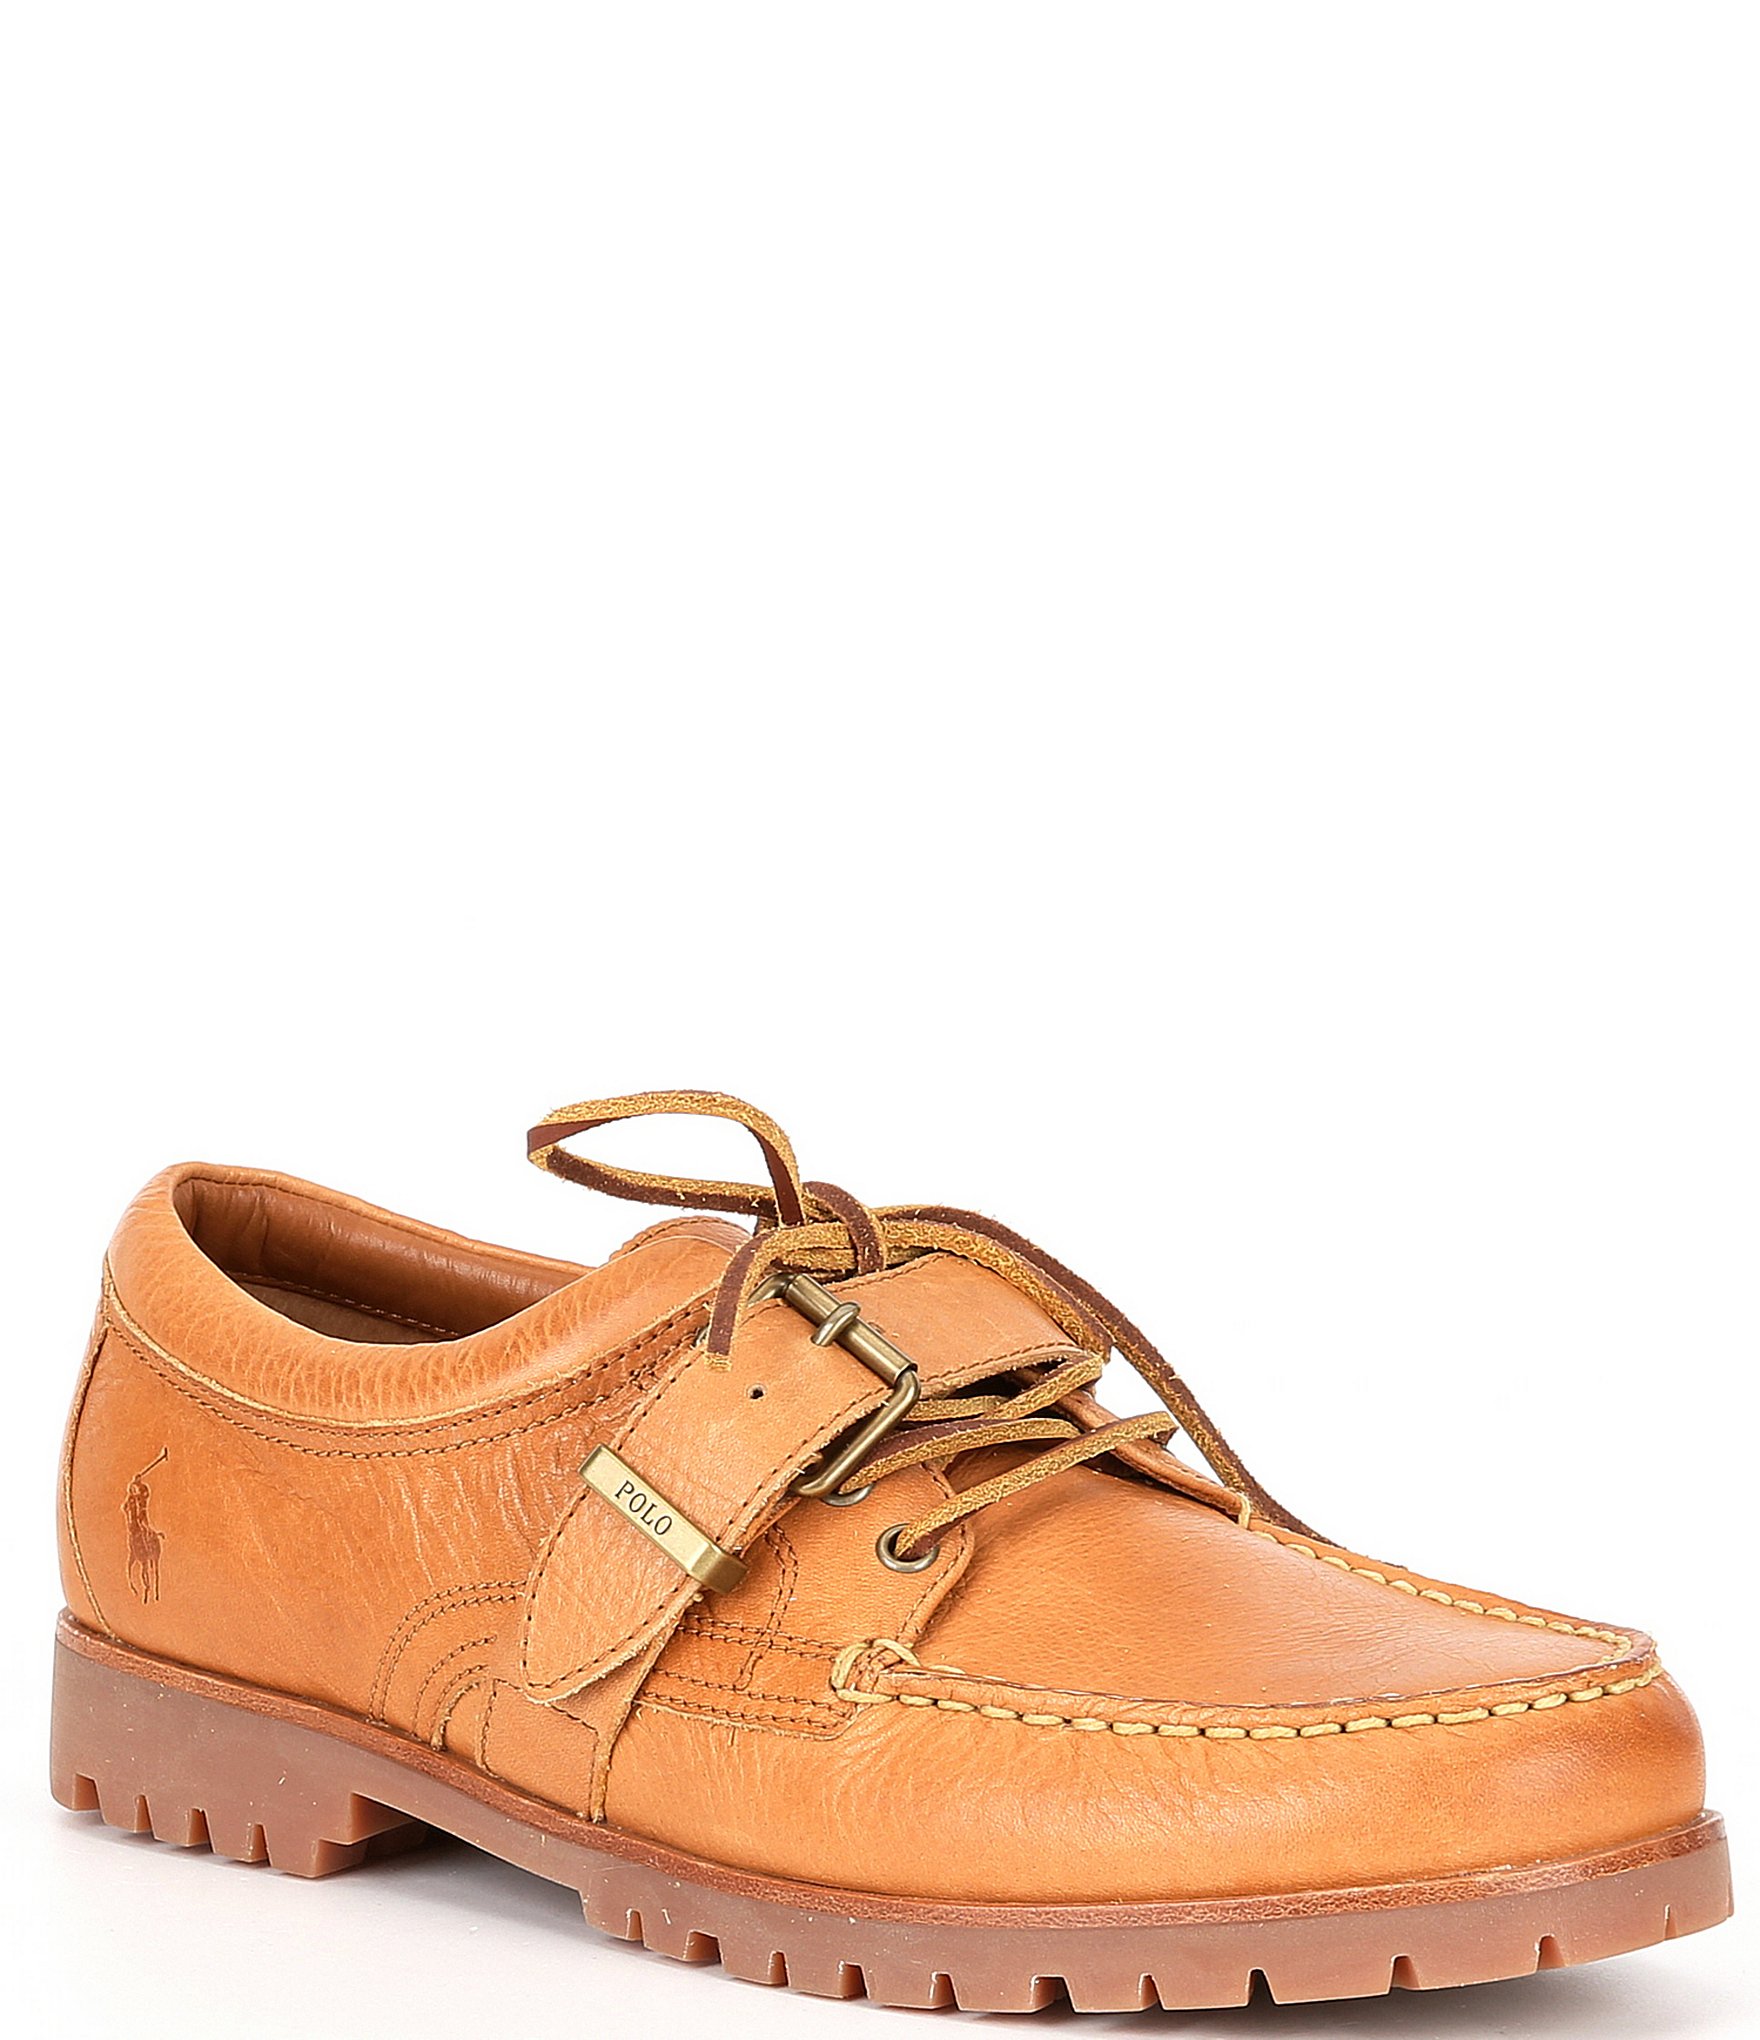 Polo Ralph Lauren boys tan canvas & brown leather deck boat shoes US 1  UK 13.5 | eBay